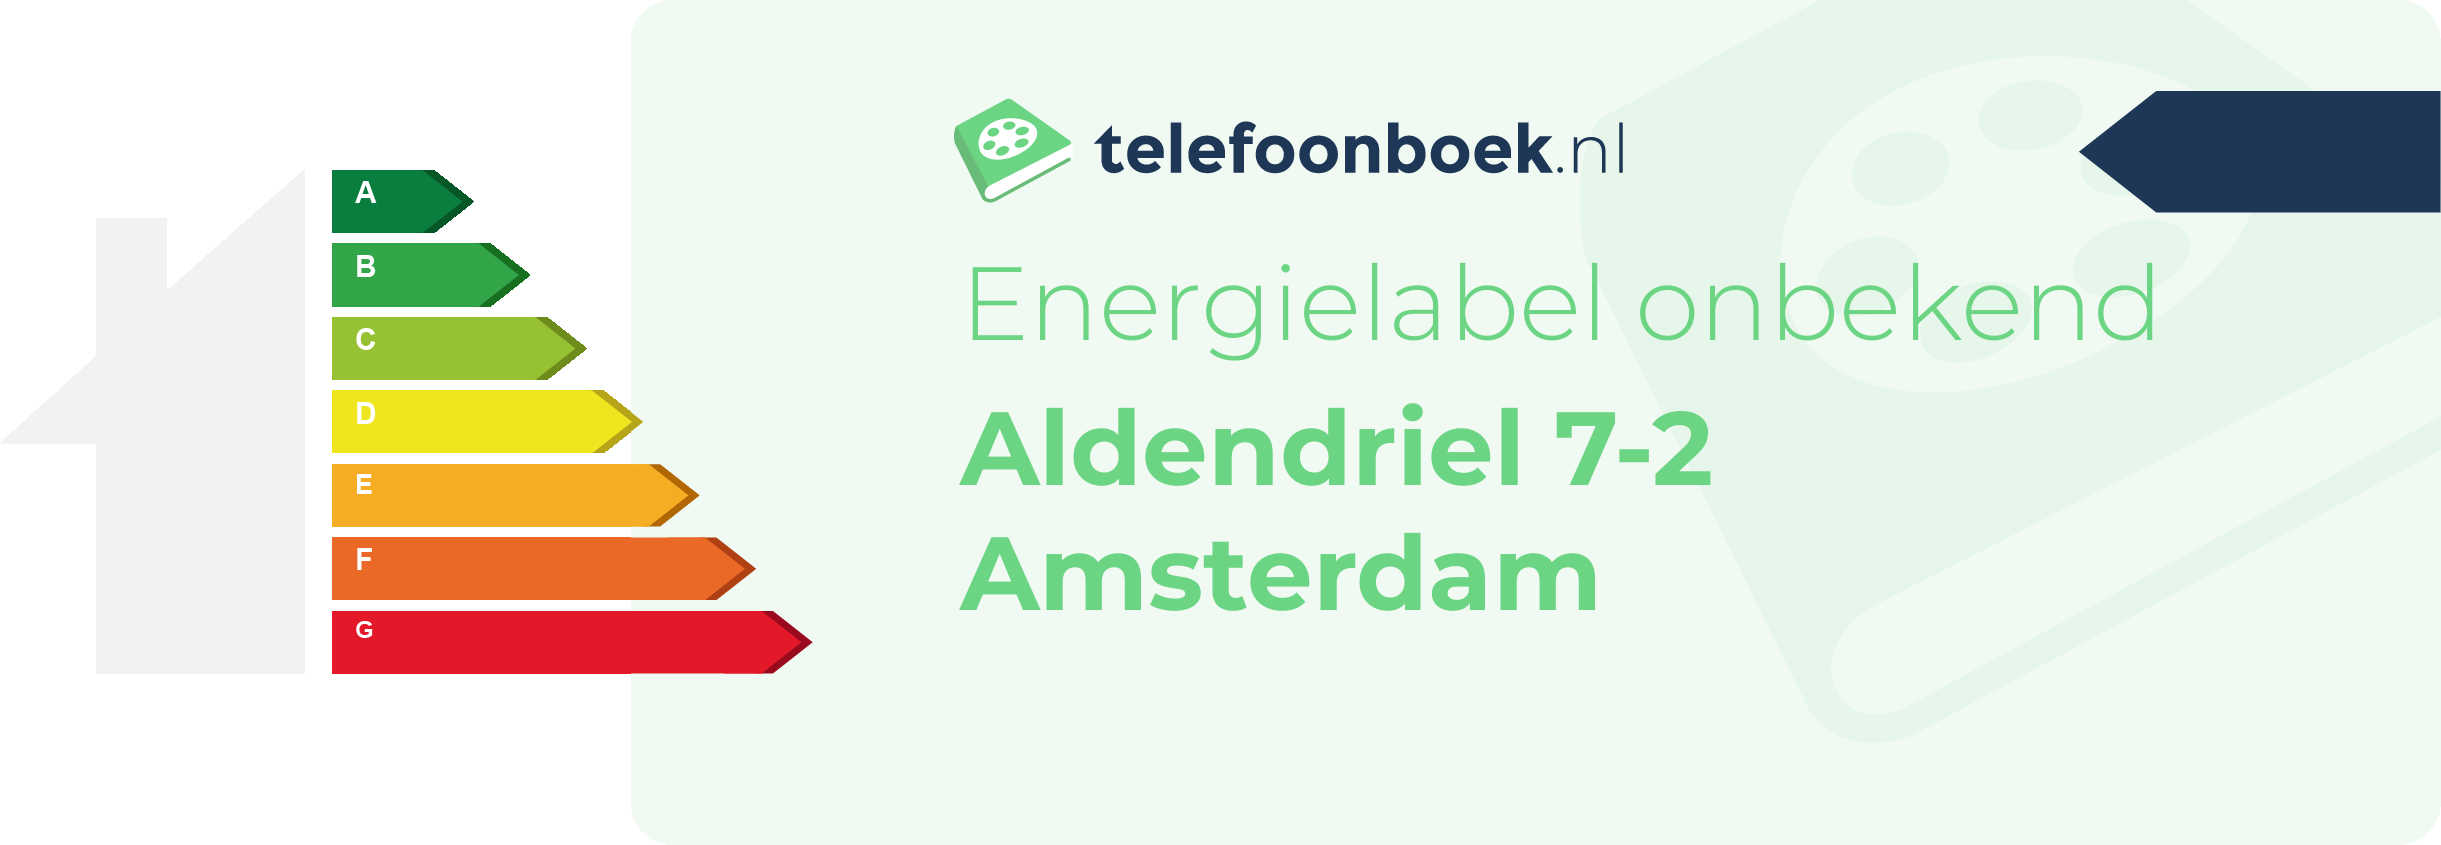 Energielabel Aldendriel 7-2 Amsterdam